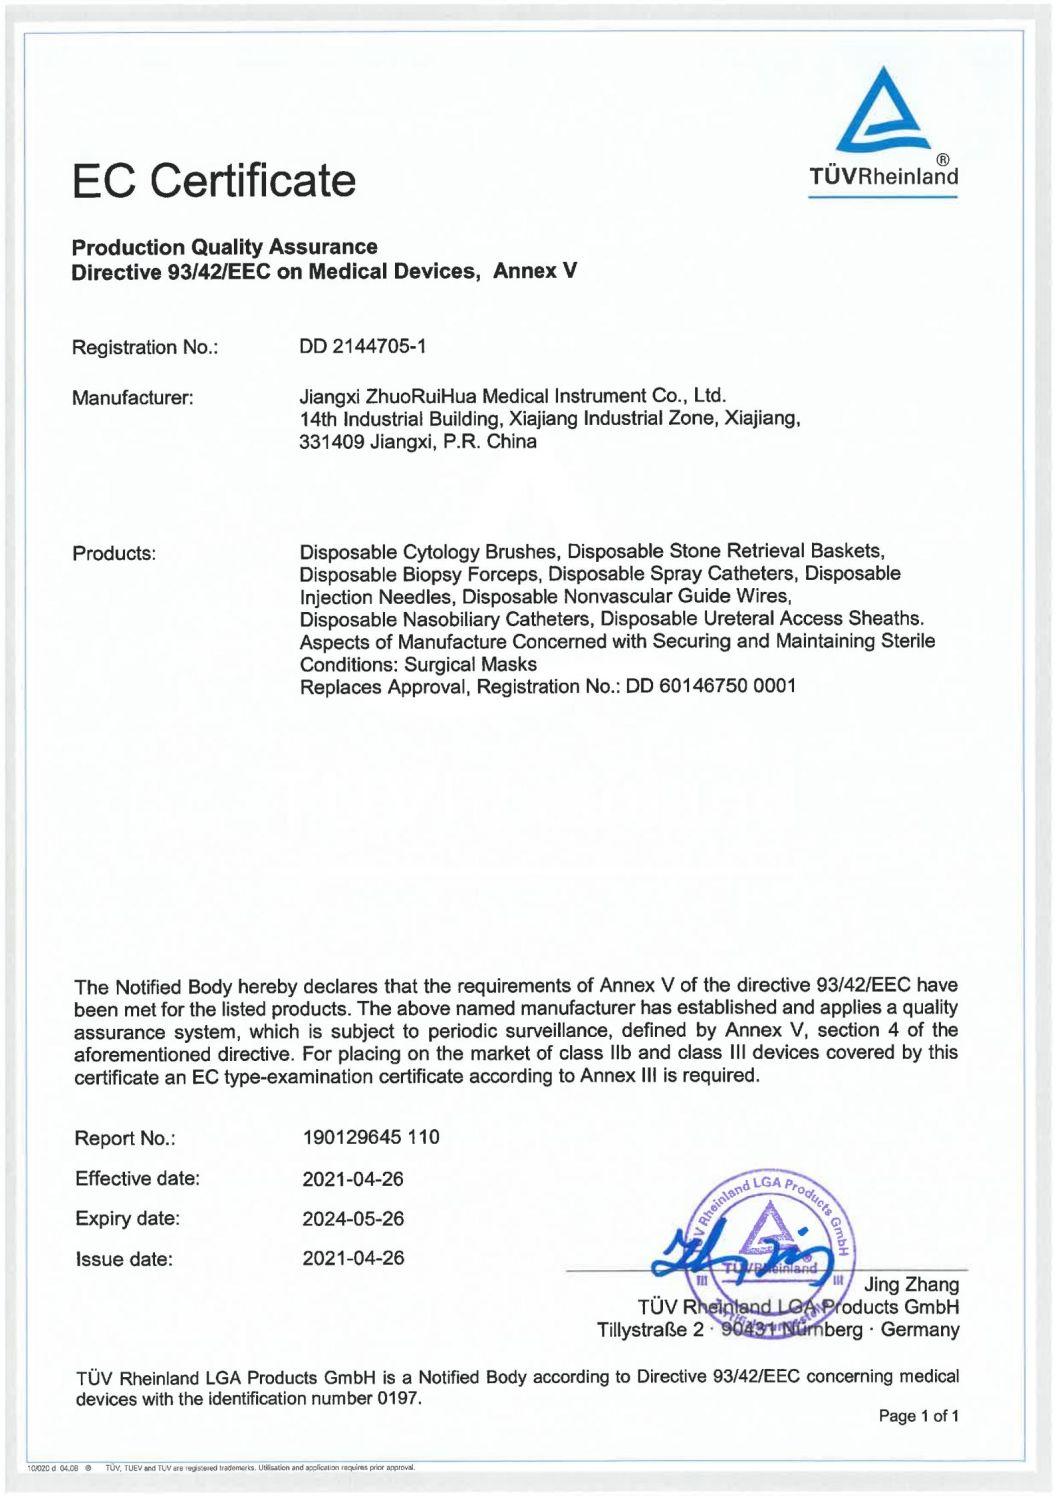 Endoscopic Accessories Naso Biliary Drainage Catheter with CE ISO FSC